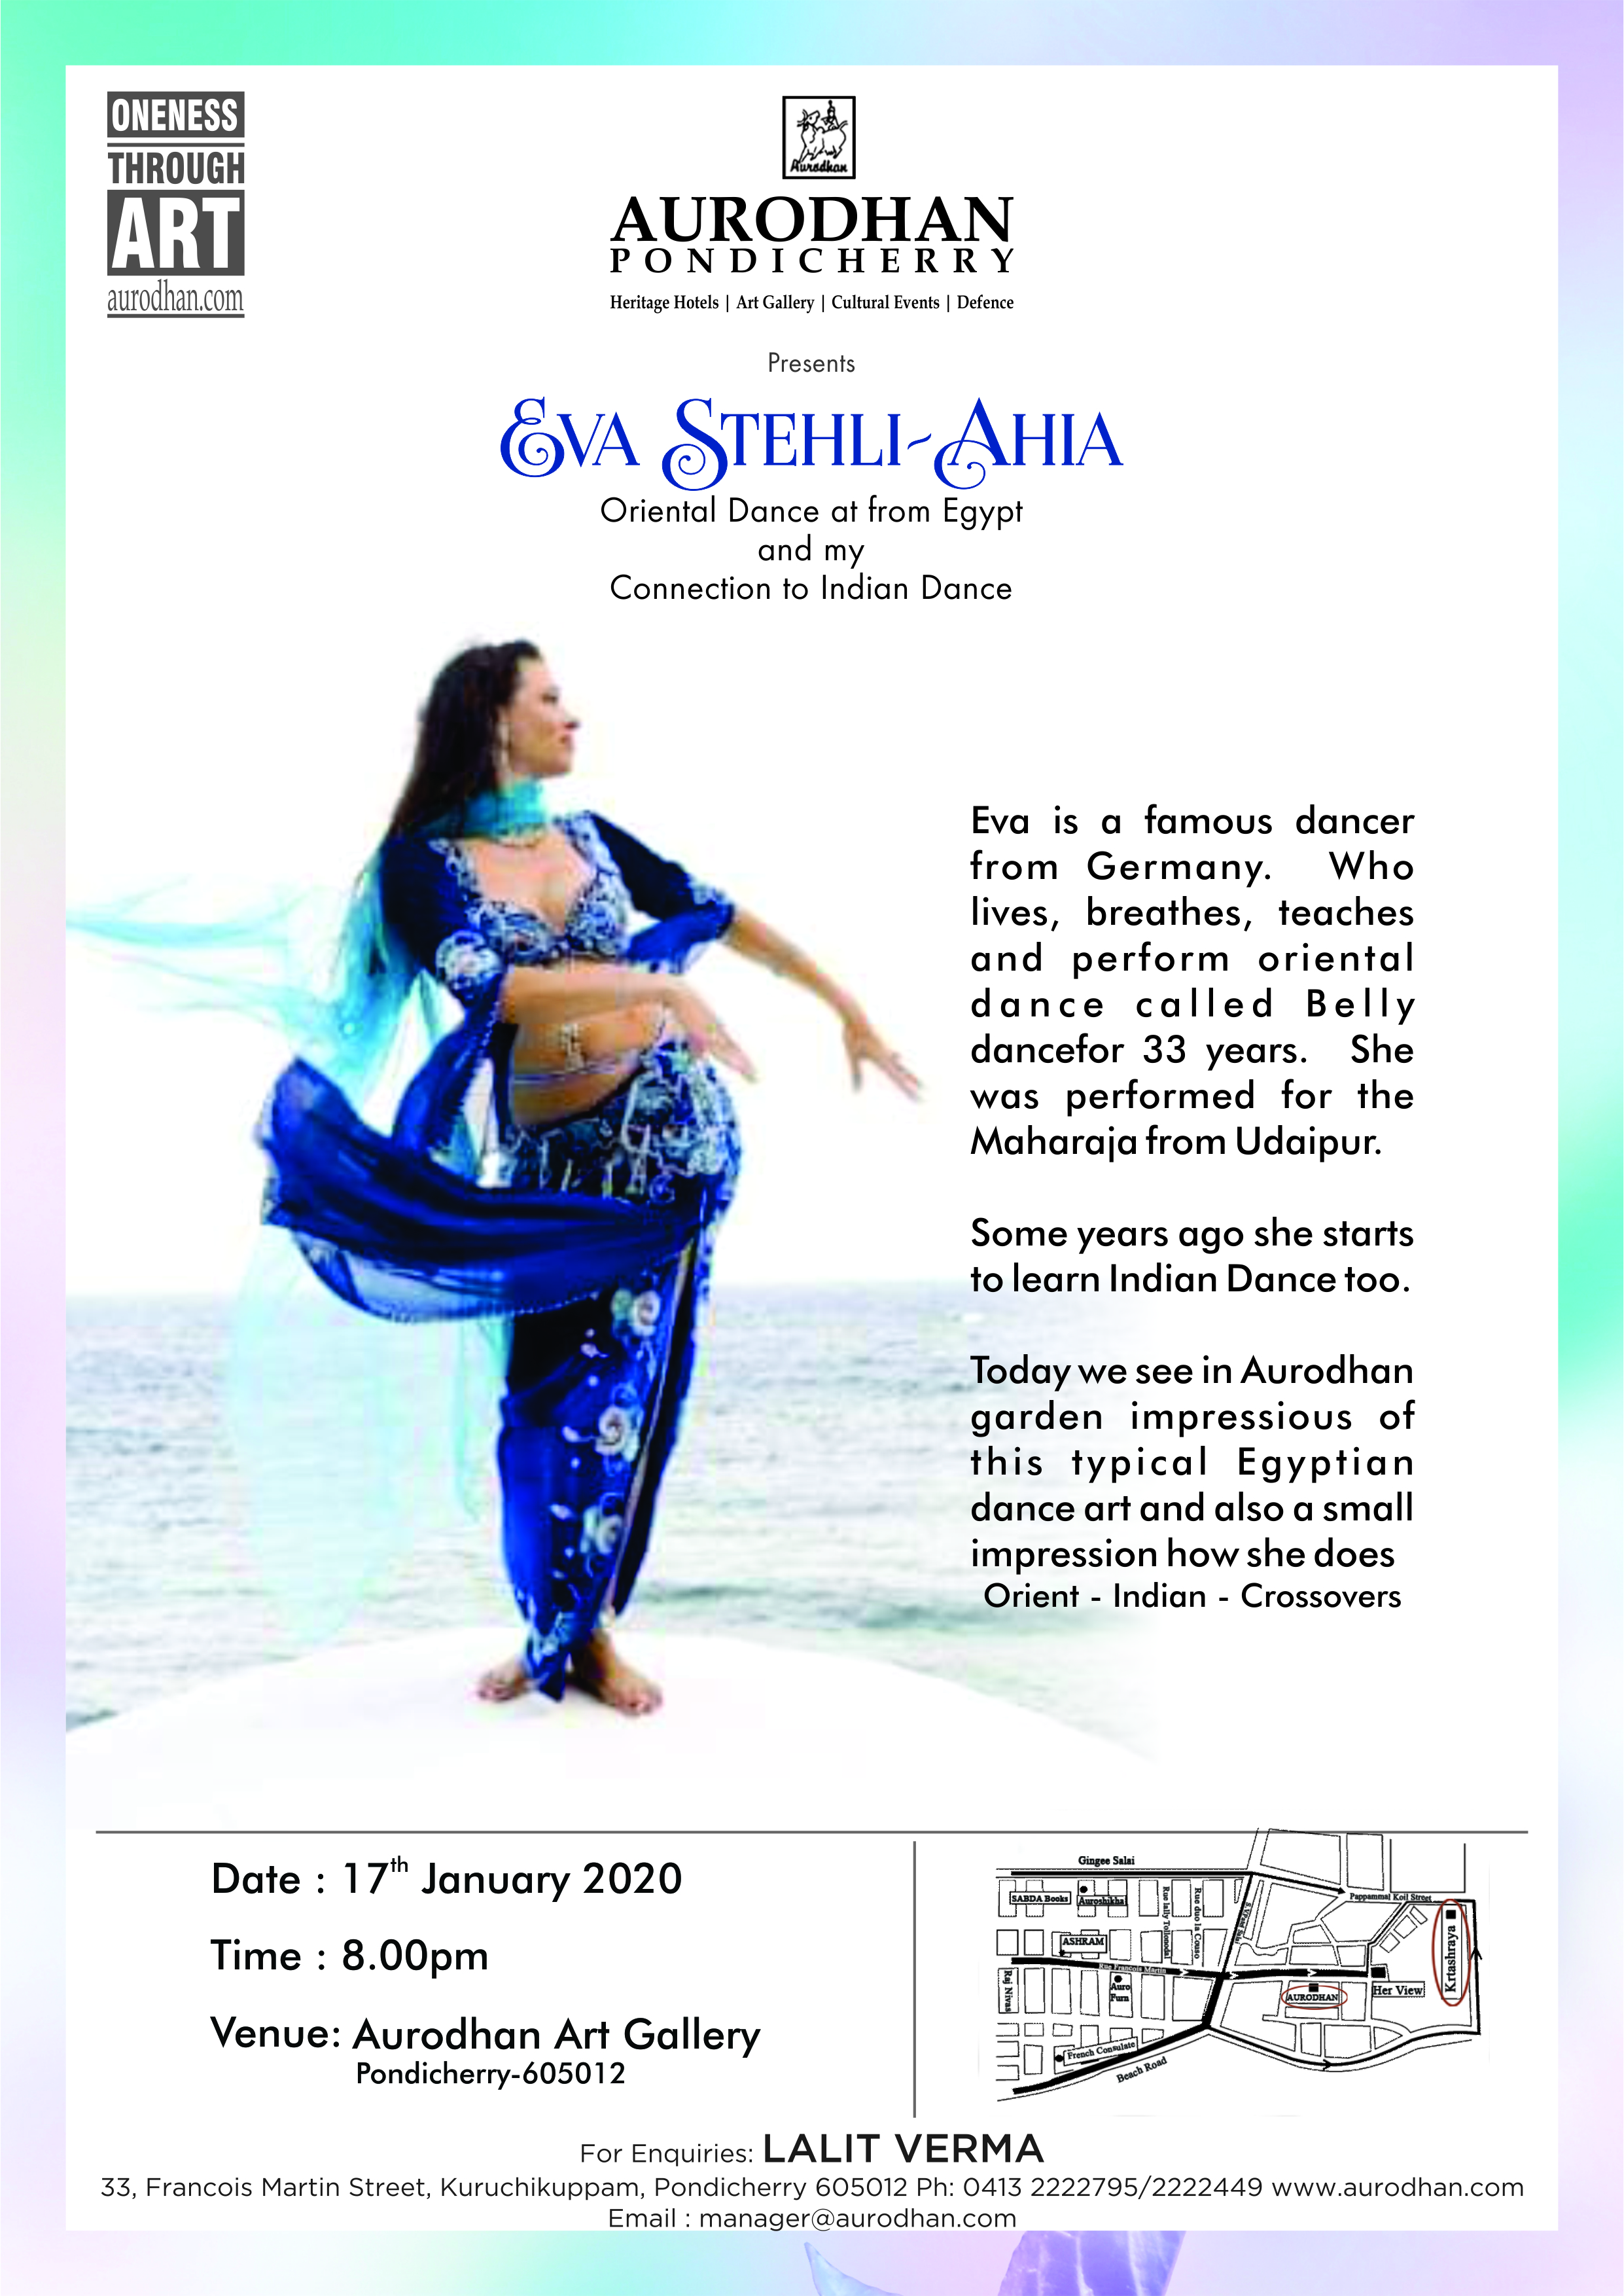 EVA STEHLI AHIA - ORIENTAL DANCE FROM EGYPT